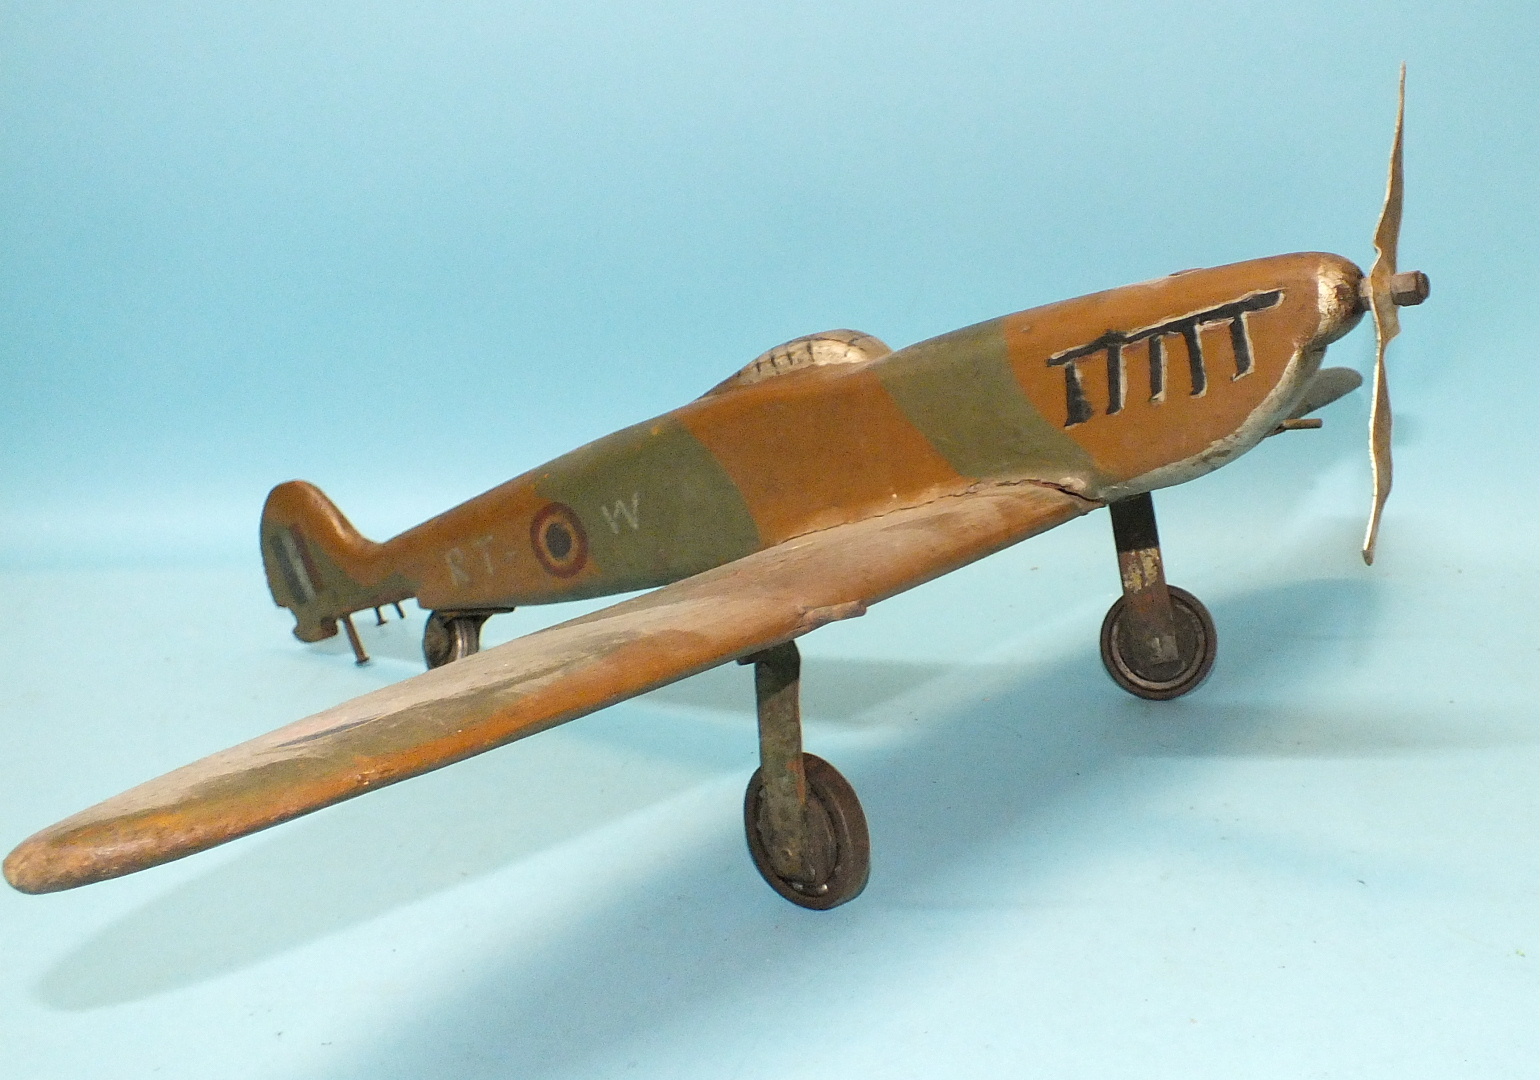 A scratch-built wooden model of a WWII Spitfire, (horizontal tail stabiliser missing), 47cm long.